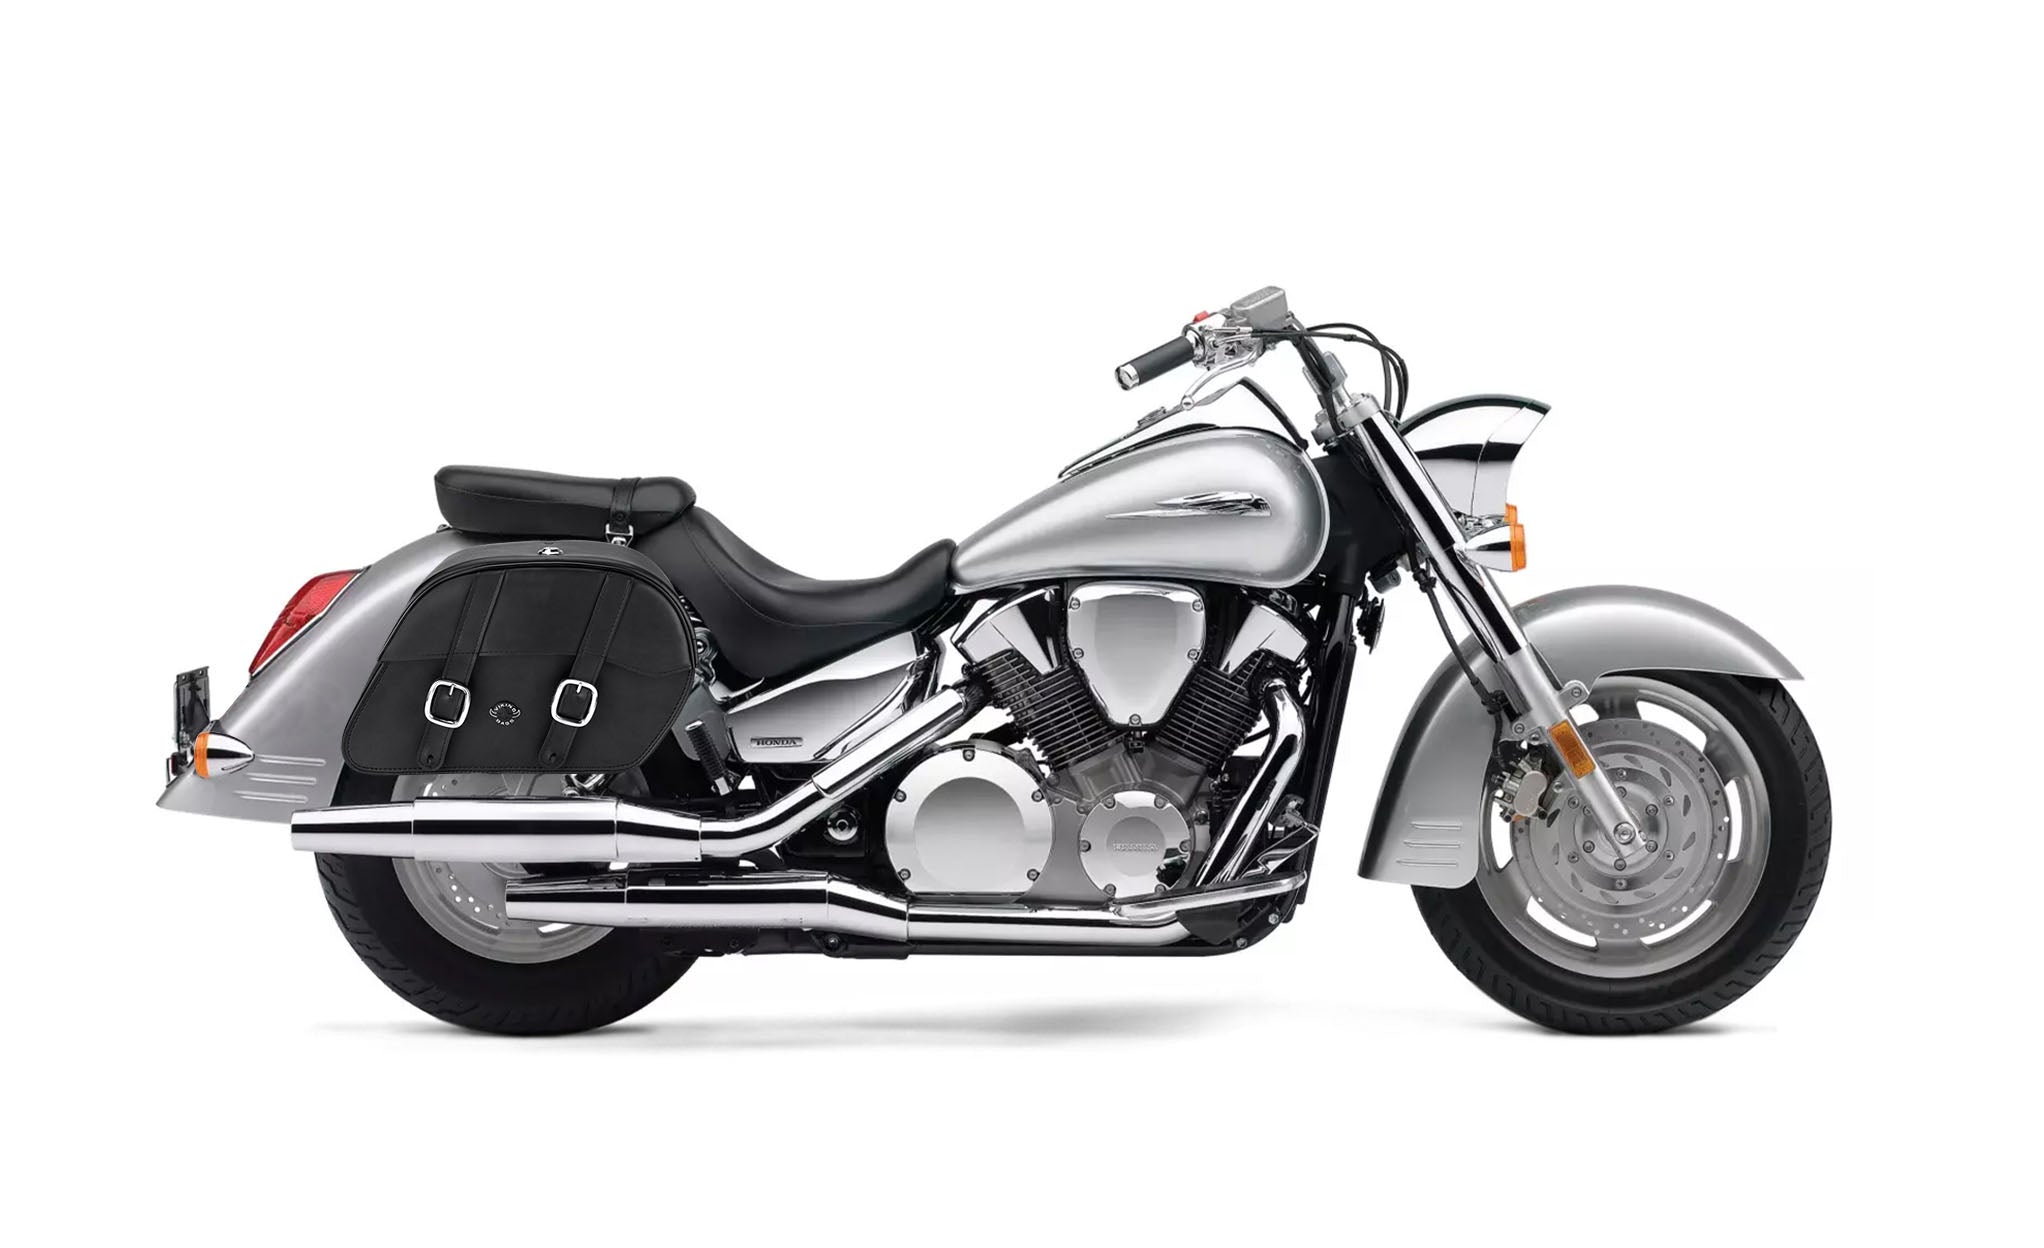 Viking Skarner Large Honda Vtx 1300 S Shock Cut Out Leather Motorcycle Saddlebags on Bike Photo @expand